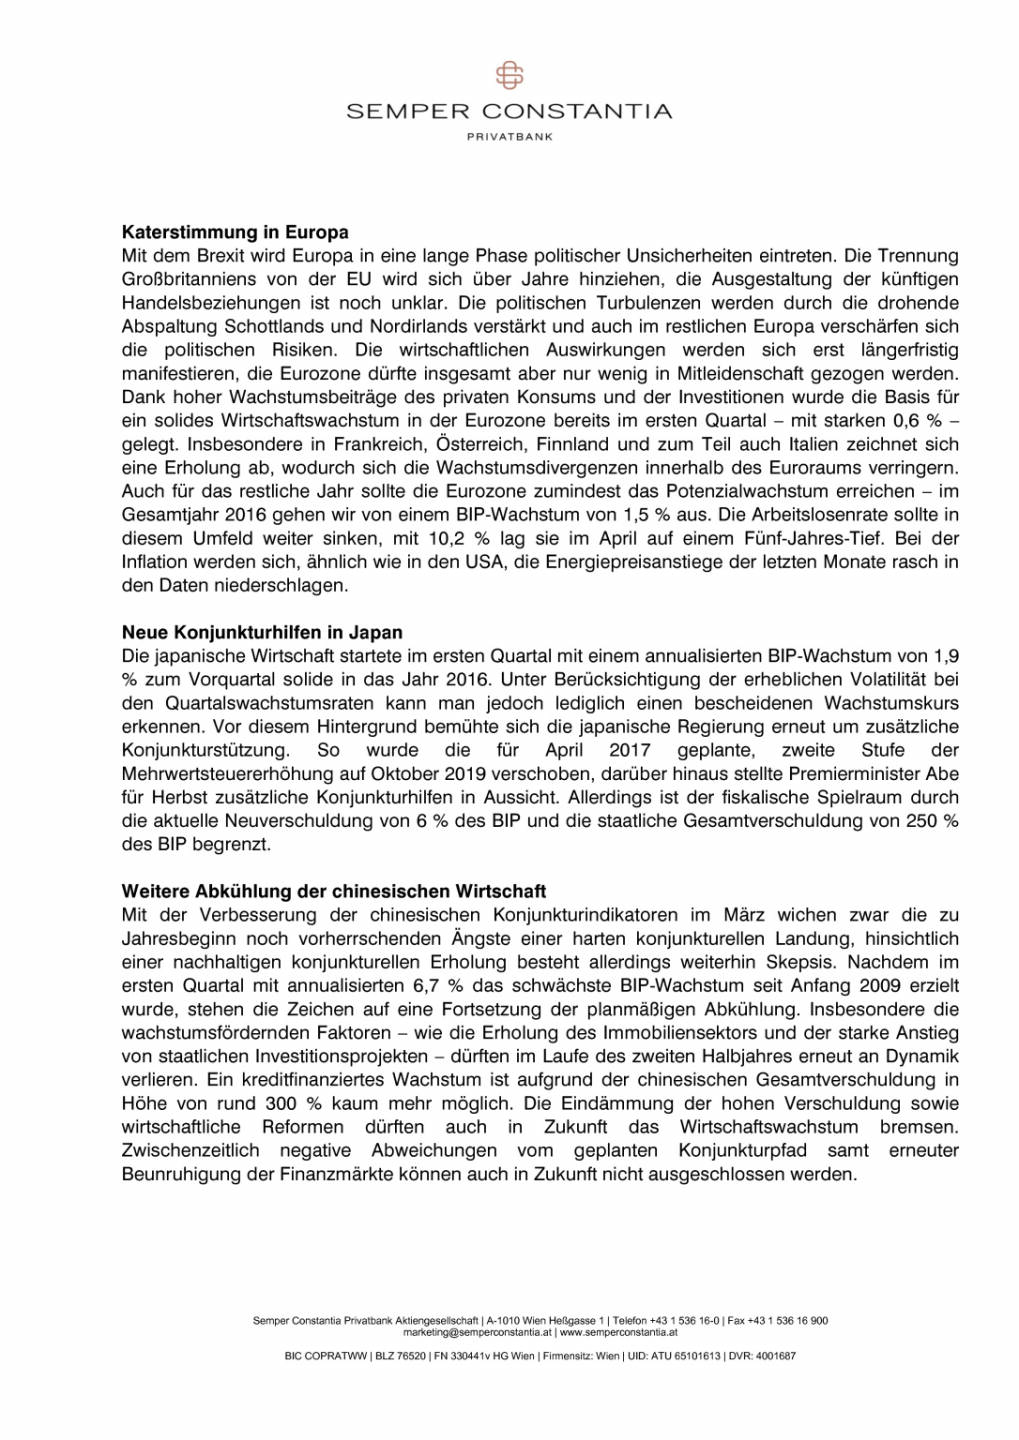 Semper Constantia Privatbank AG: Markteinschätzung 3. Quartal 2016, Seite 2/6, komplettes Dokument unter http://boerse-social.com/static/uploads/file_1326_semper_constantia_privatbank_ag_markteinschatzung_3_quartal_2016.pdf